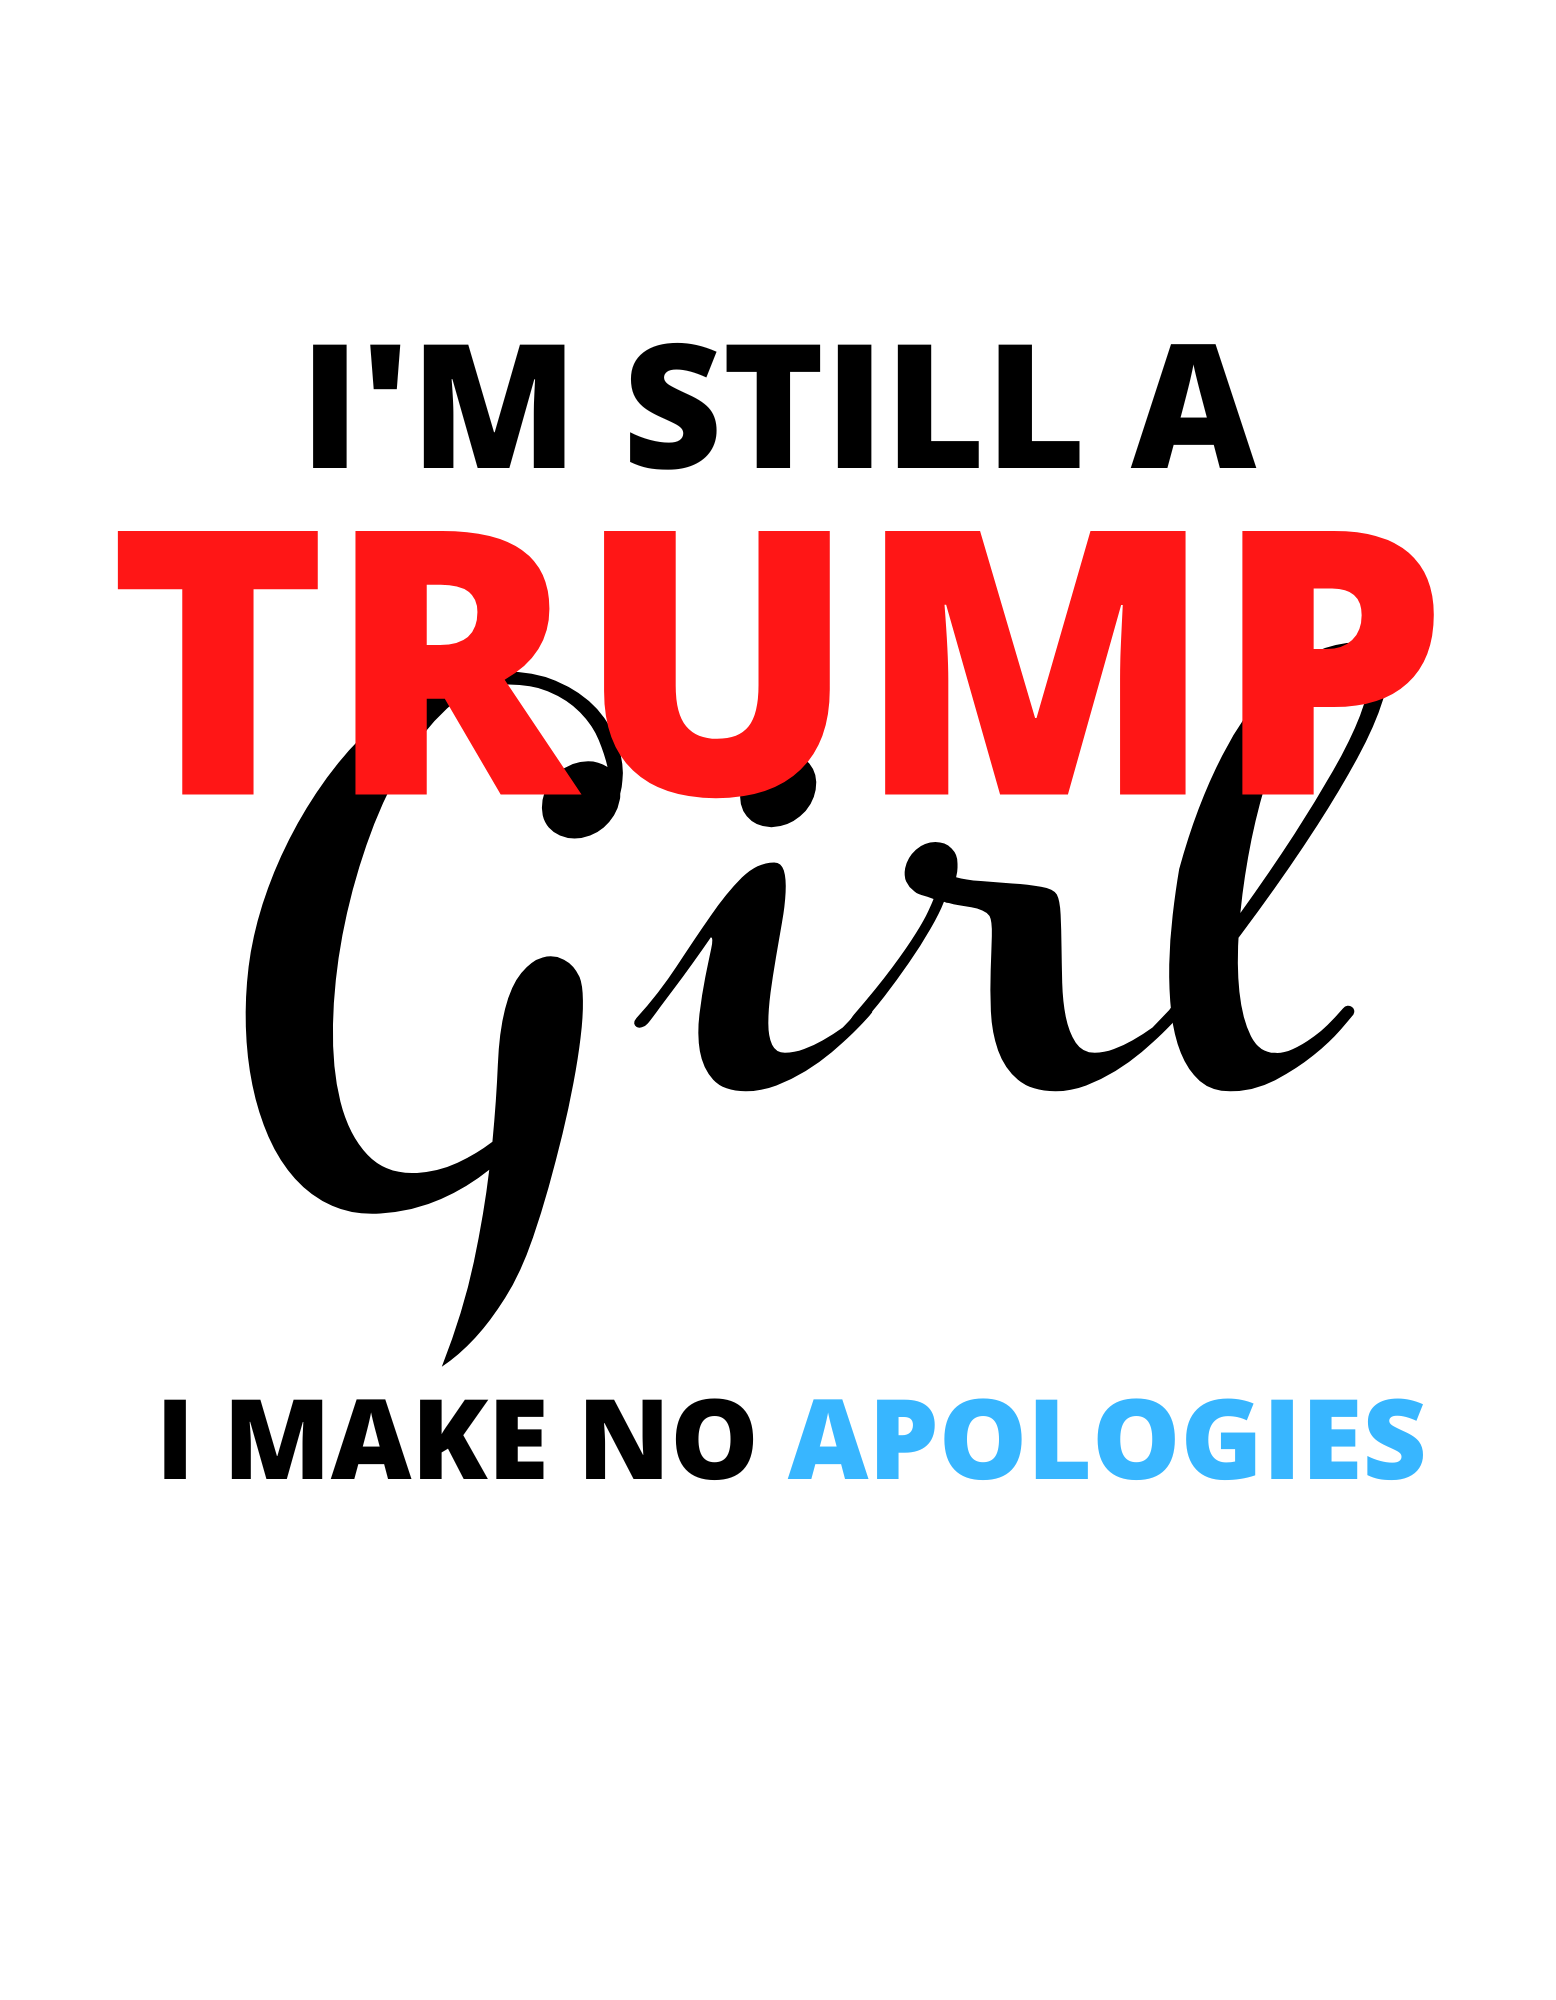 Trump Girl Klistermärke